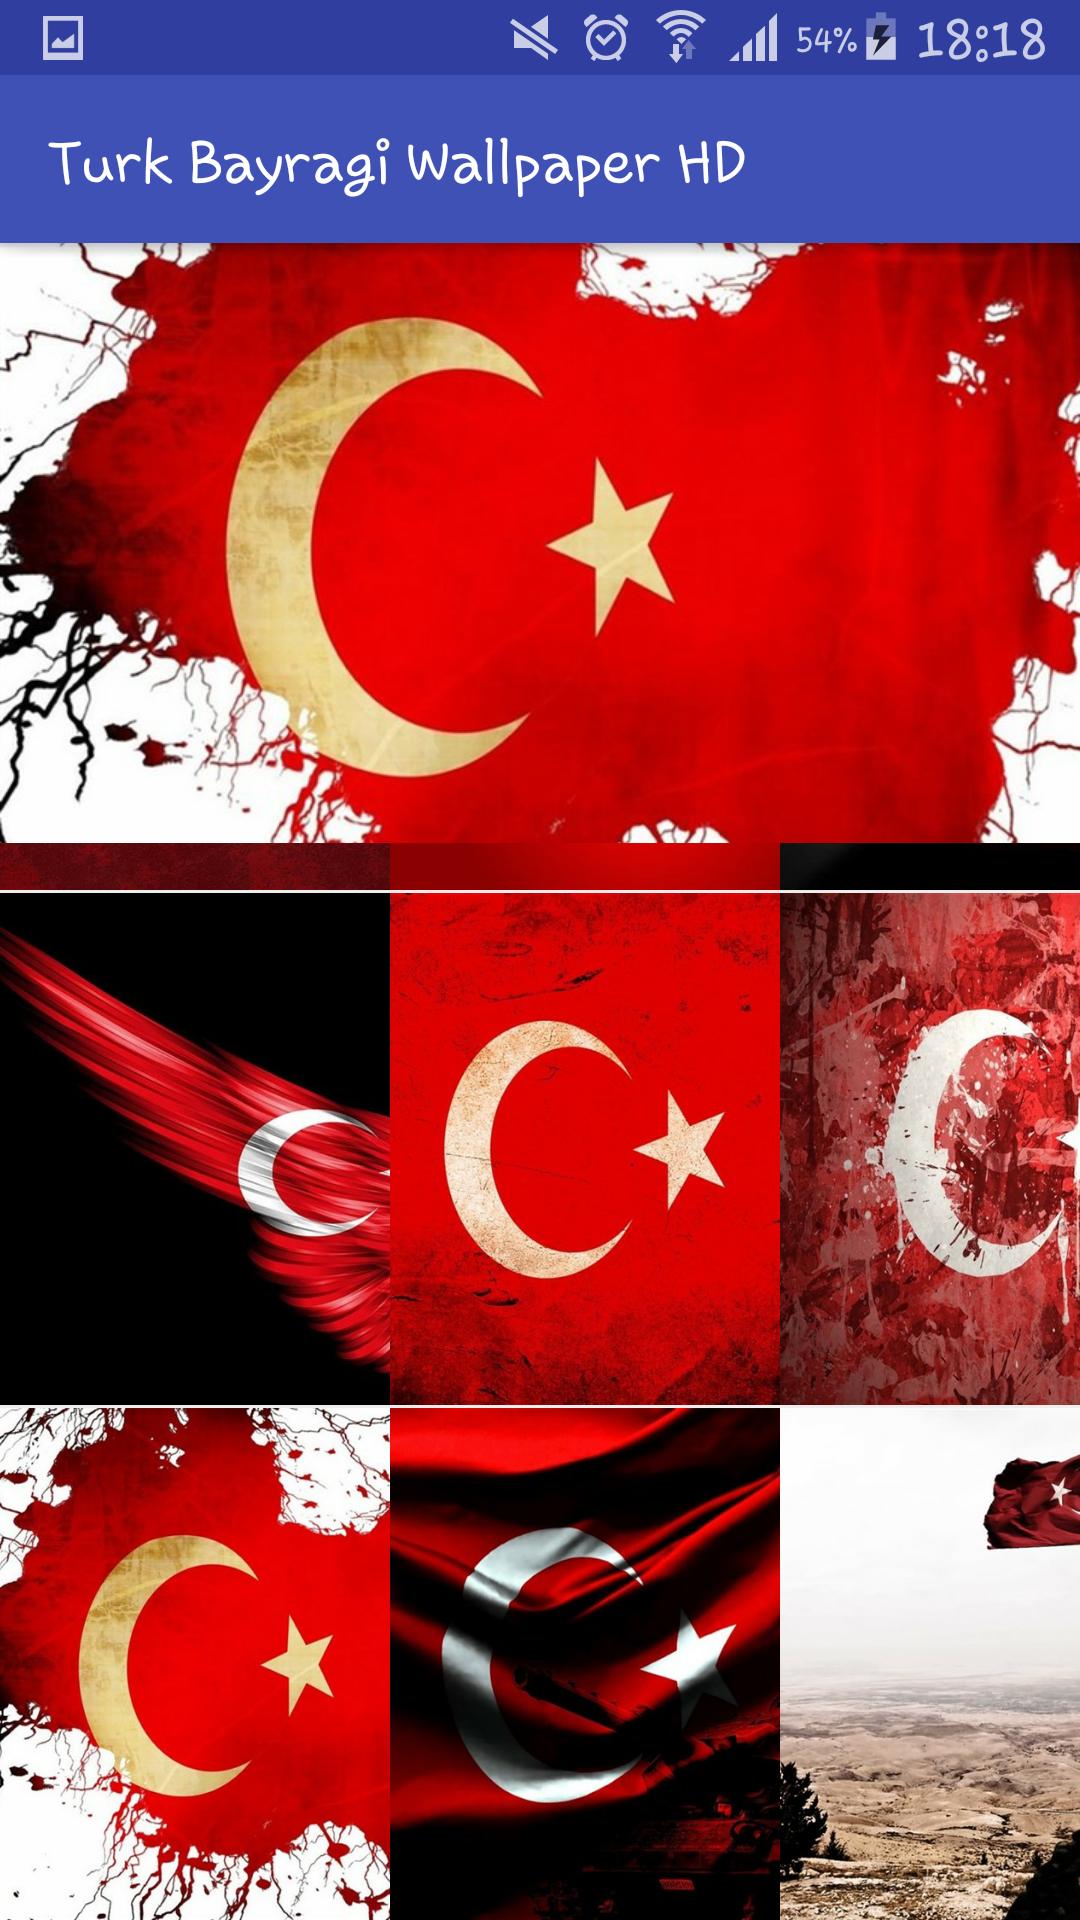 Turk Bayragi Wallpaper Hd For Android Apk Download - turk bayragi roblox